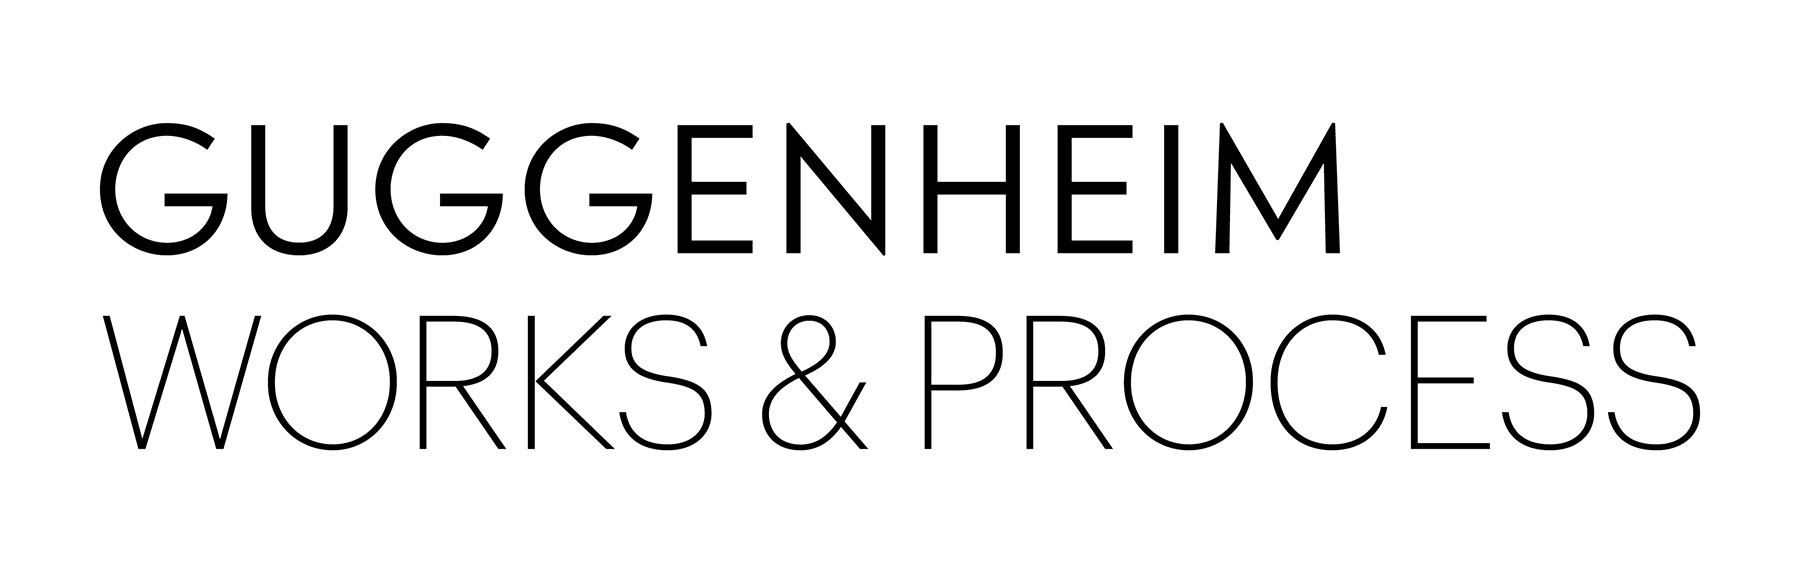 logo for guggenheim works & process